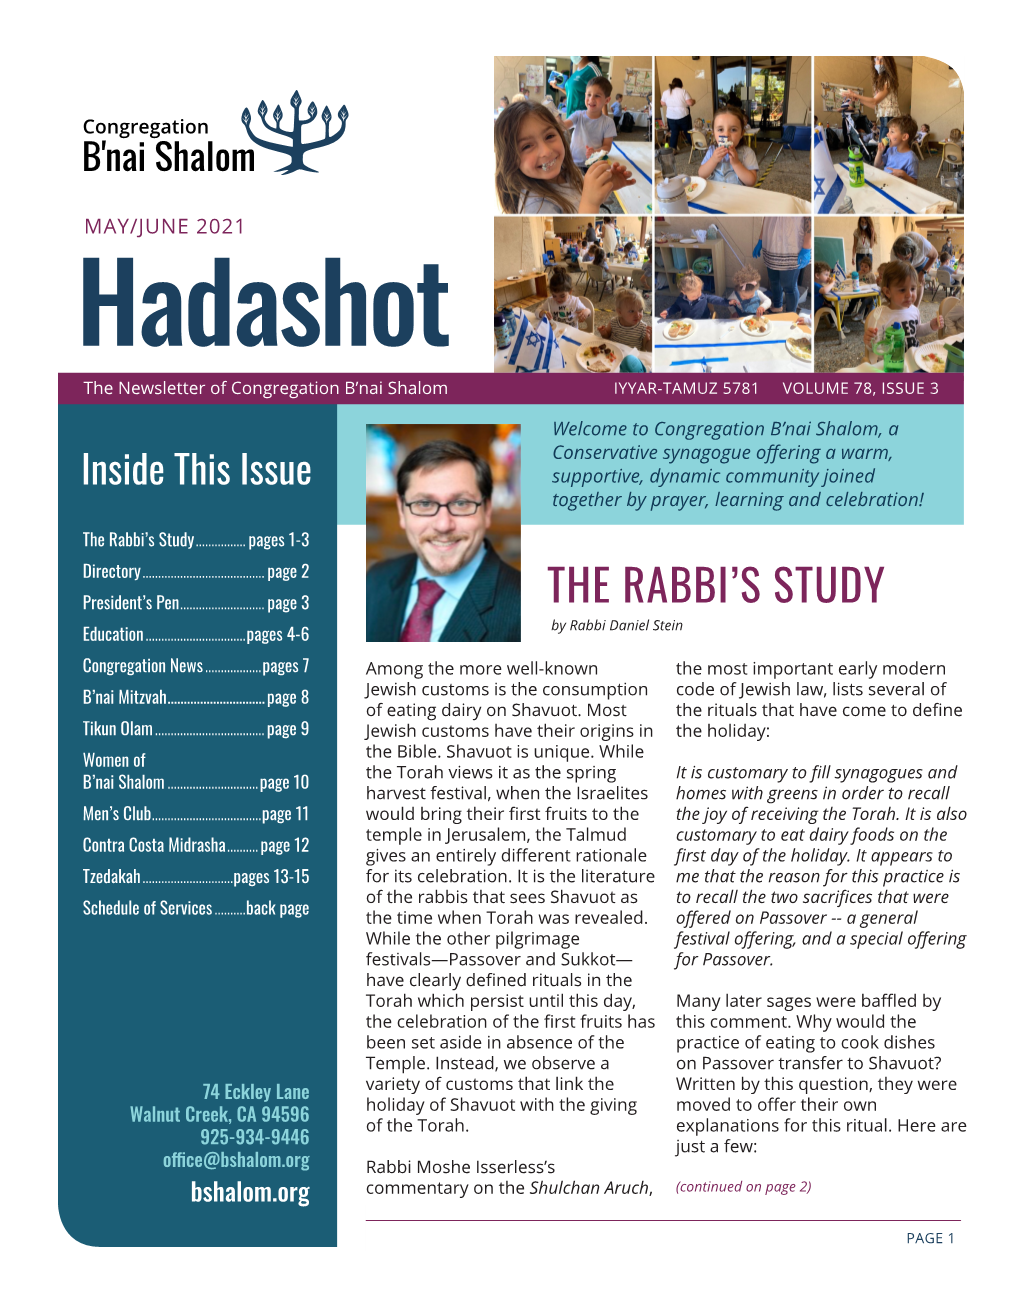 The Rabbi's Study